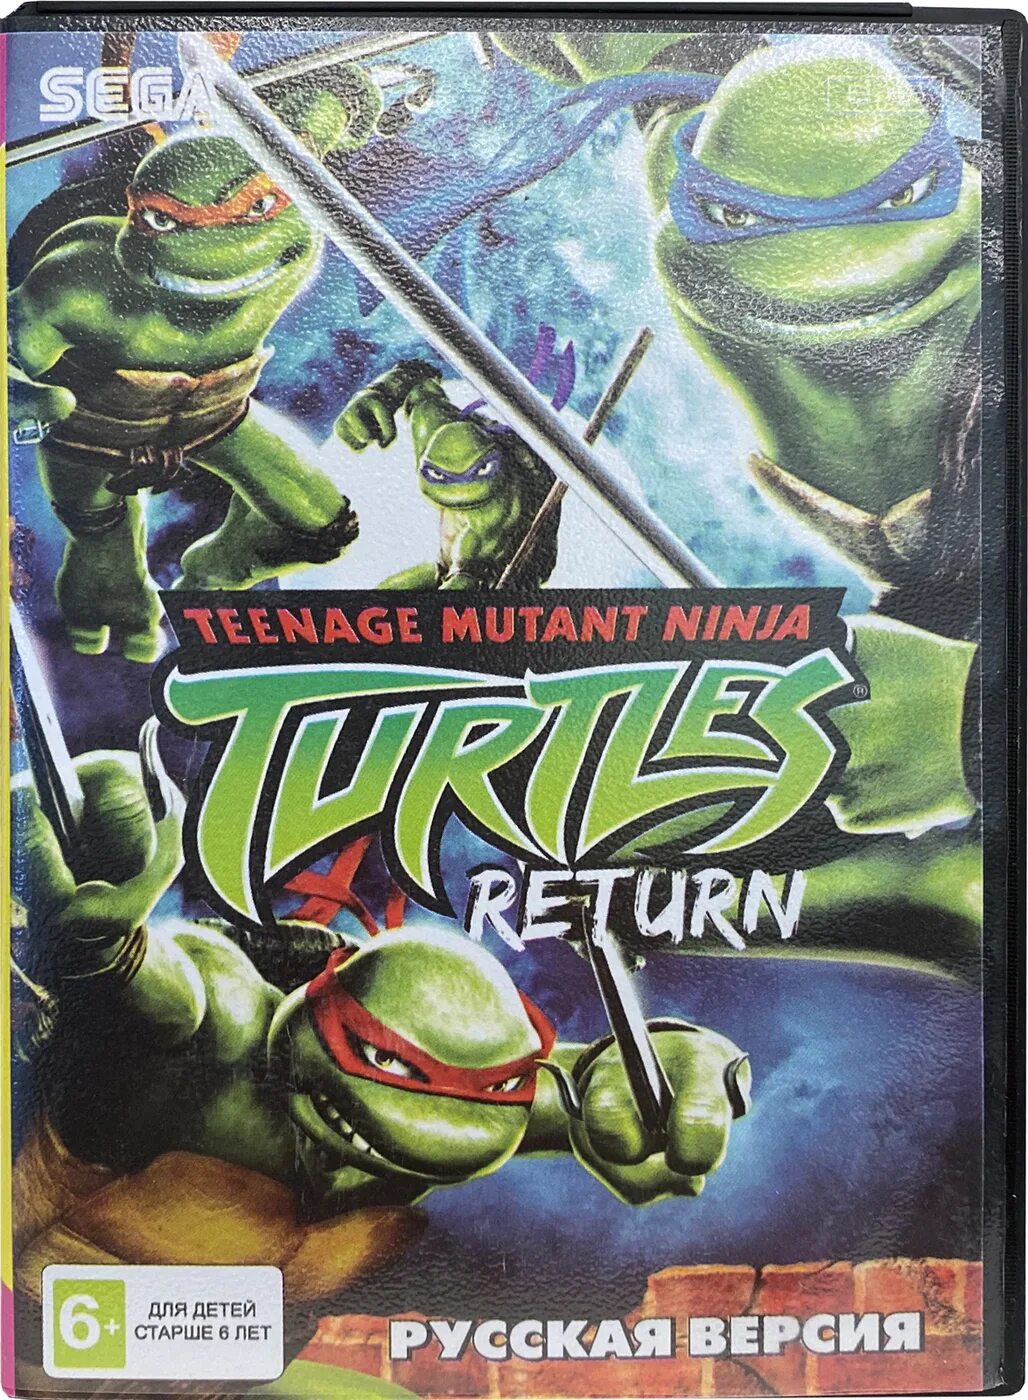 Tmnt sega. Черепашки сега. Черепашки ниндзя 2007. Teenage Mutant Ninja Turtles (игра, 2003).